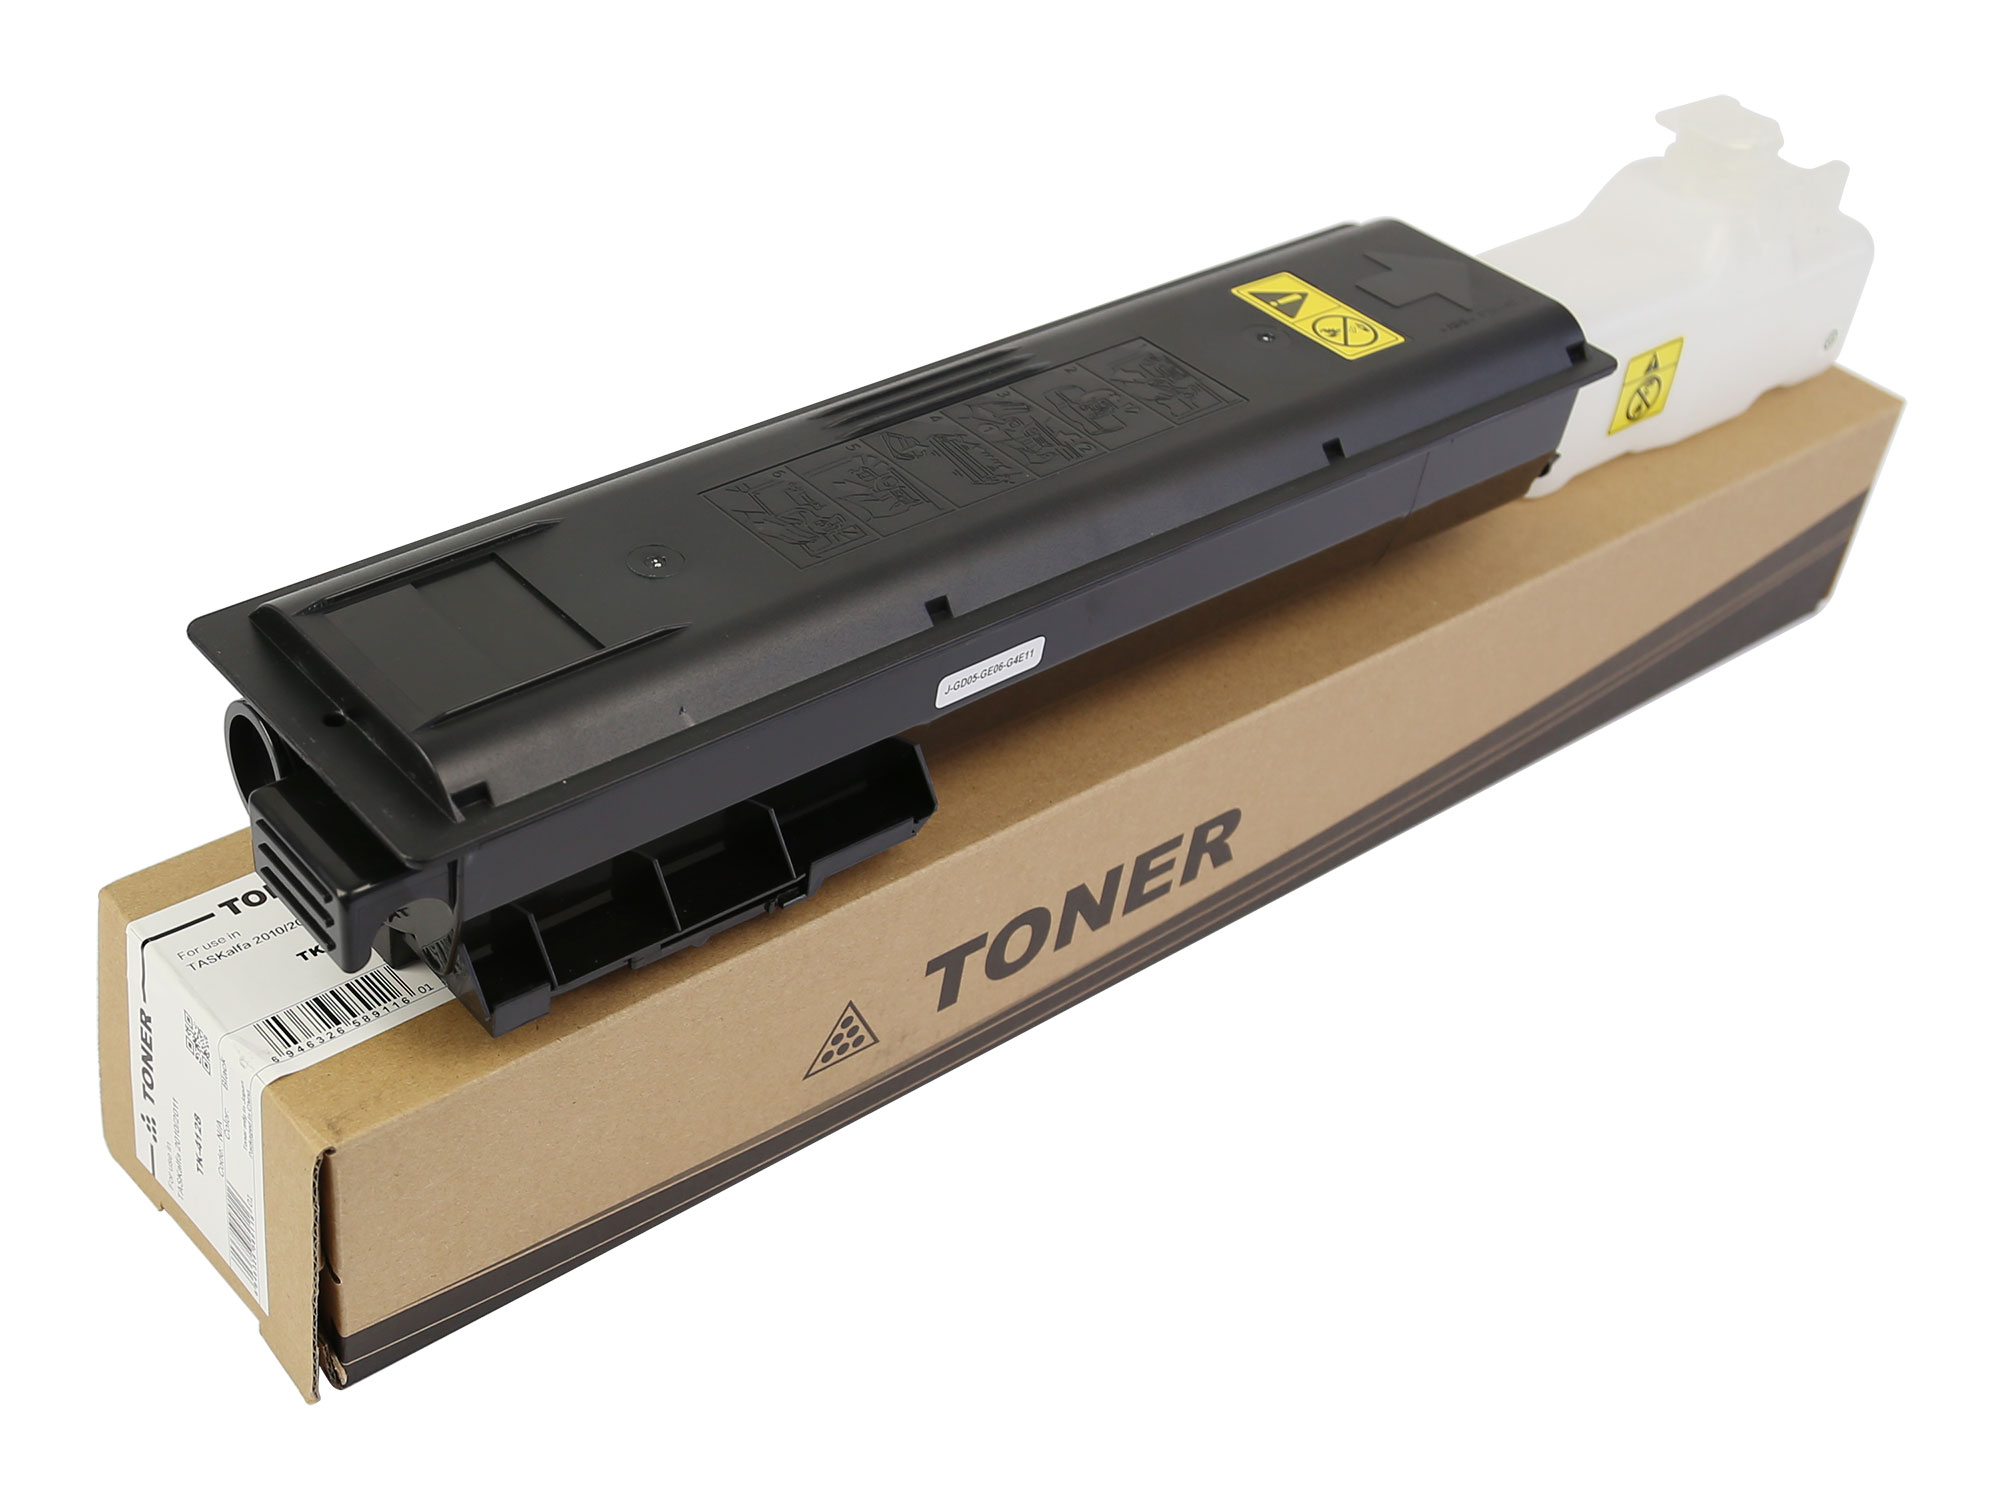 TK-4128 Toner Cartridge for Kyocera TASKalfa 2010